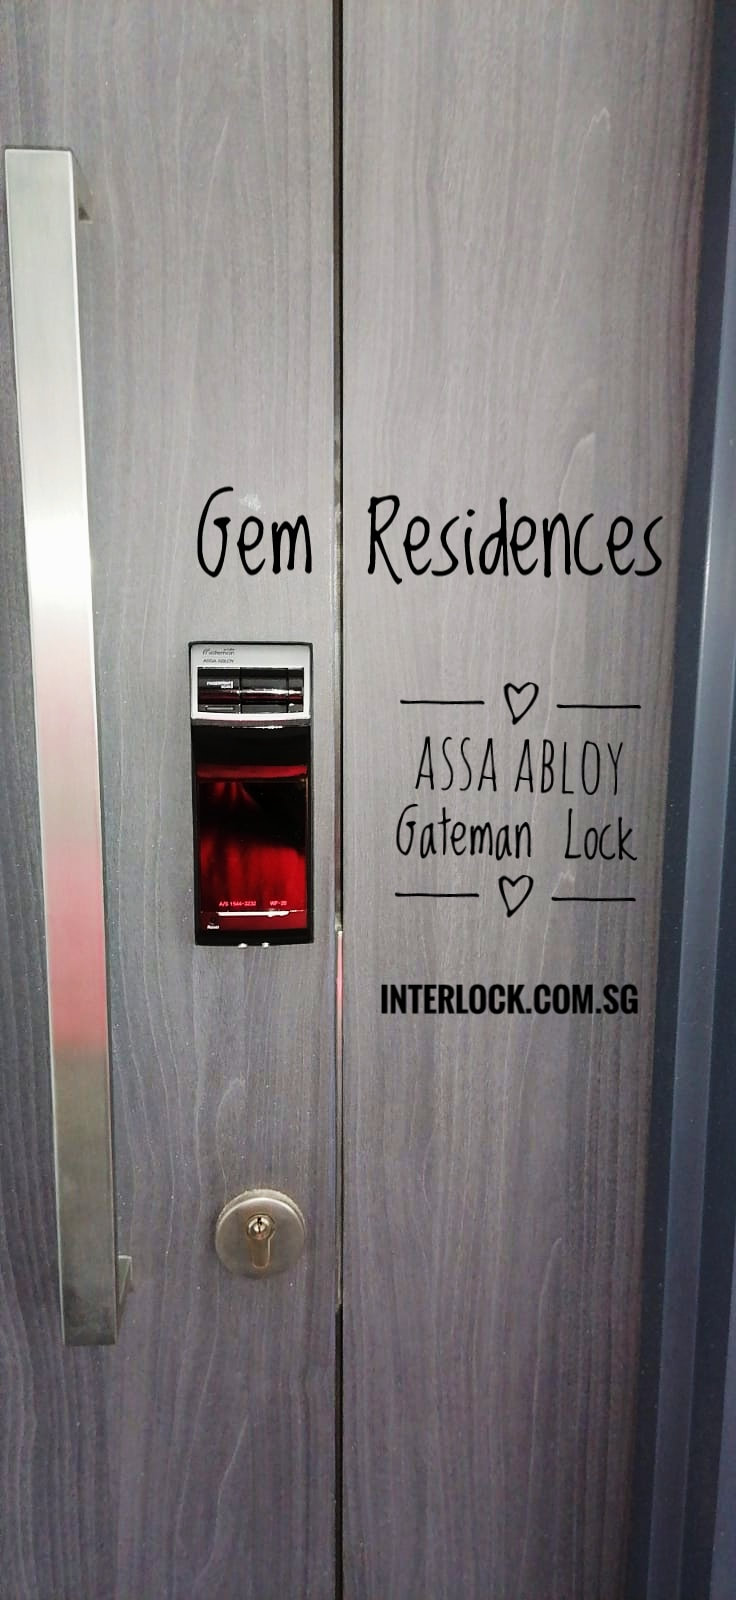 Assa Abloy Gateman Fingus digital lock at Gem Residences door